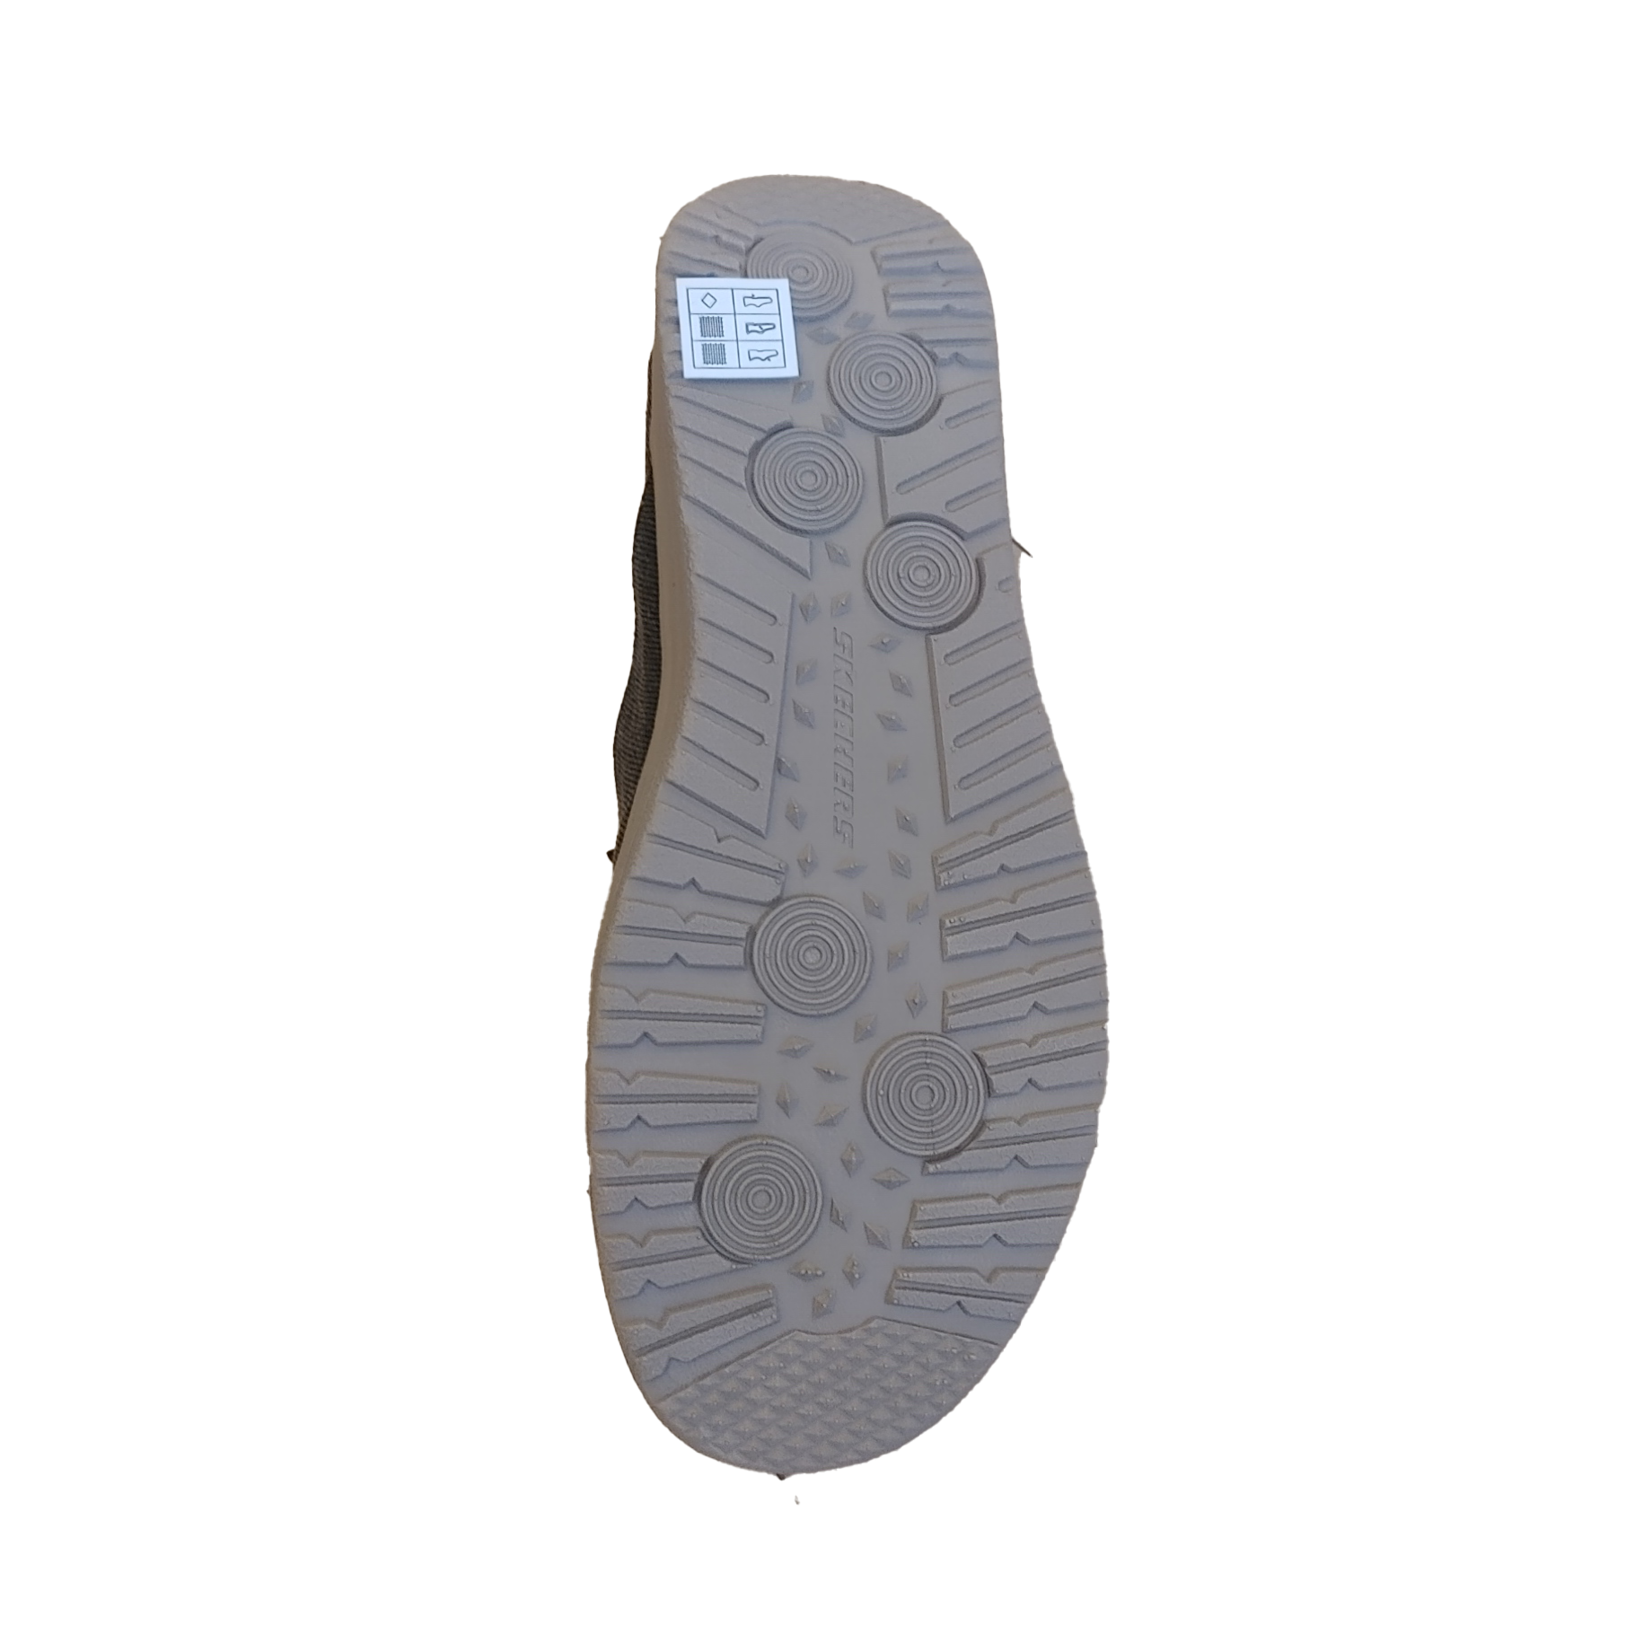 Skechers Skechers memory foam classic fit air-cooled mens shoe, shoes